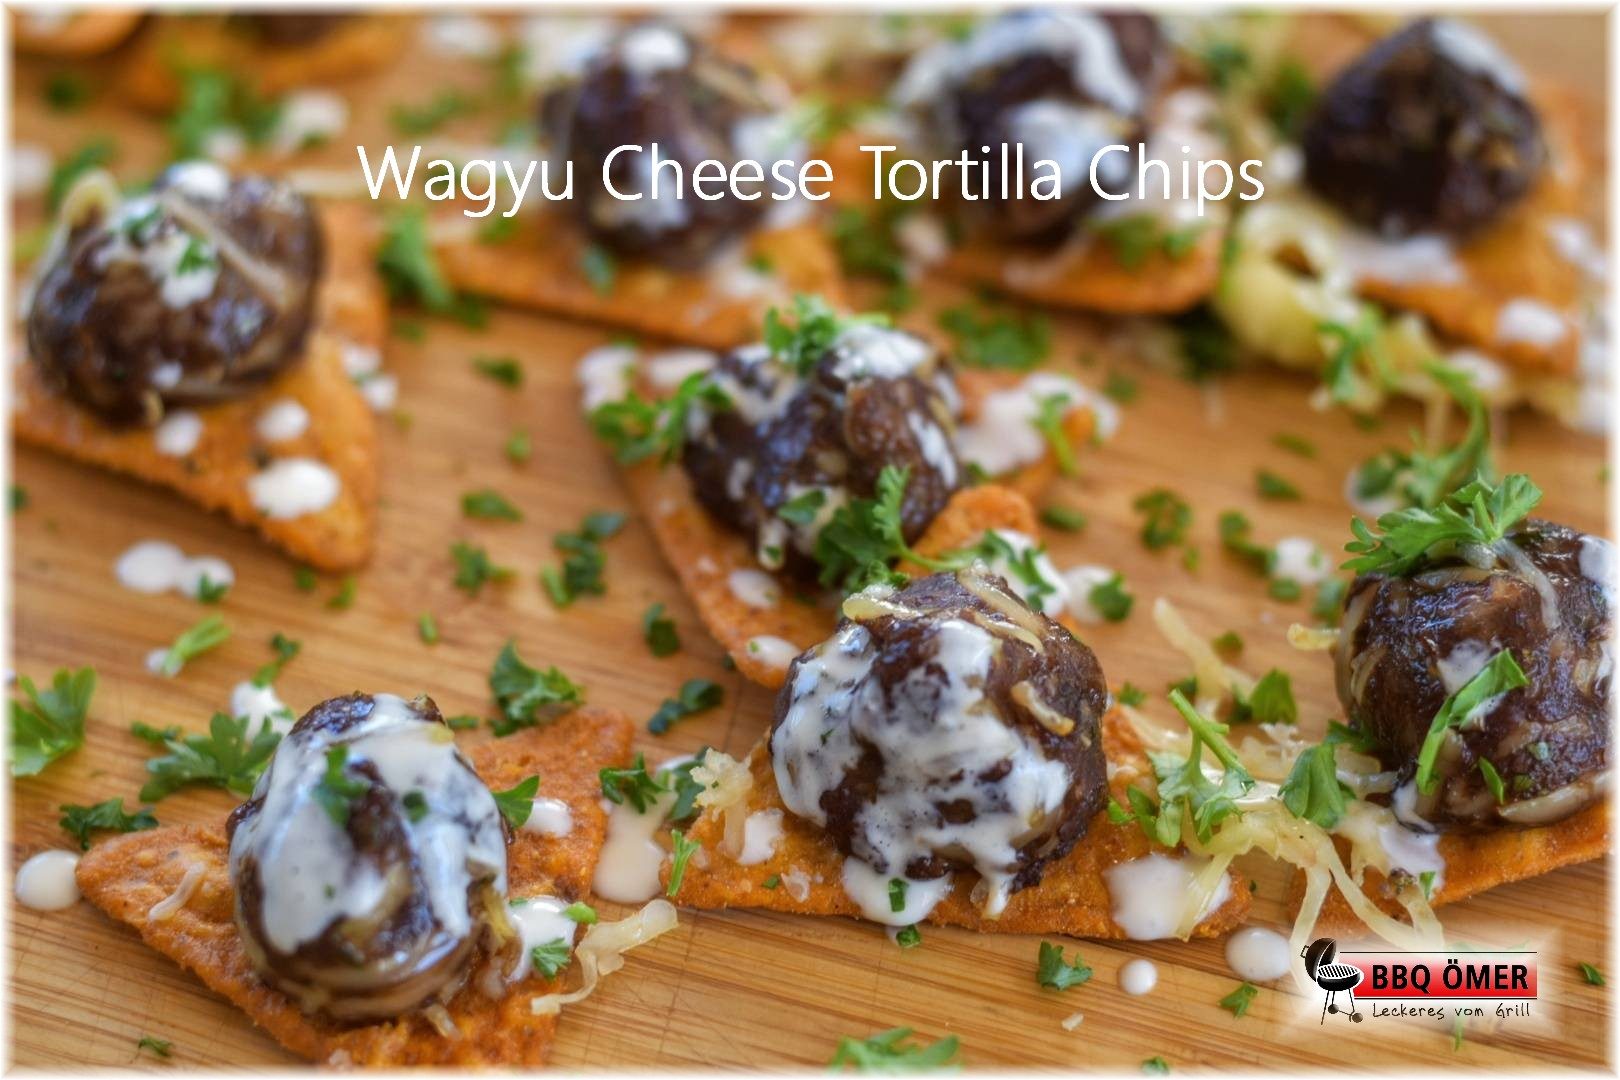 Wagyu Cheese Tortilla Chips